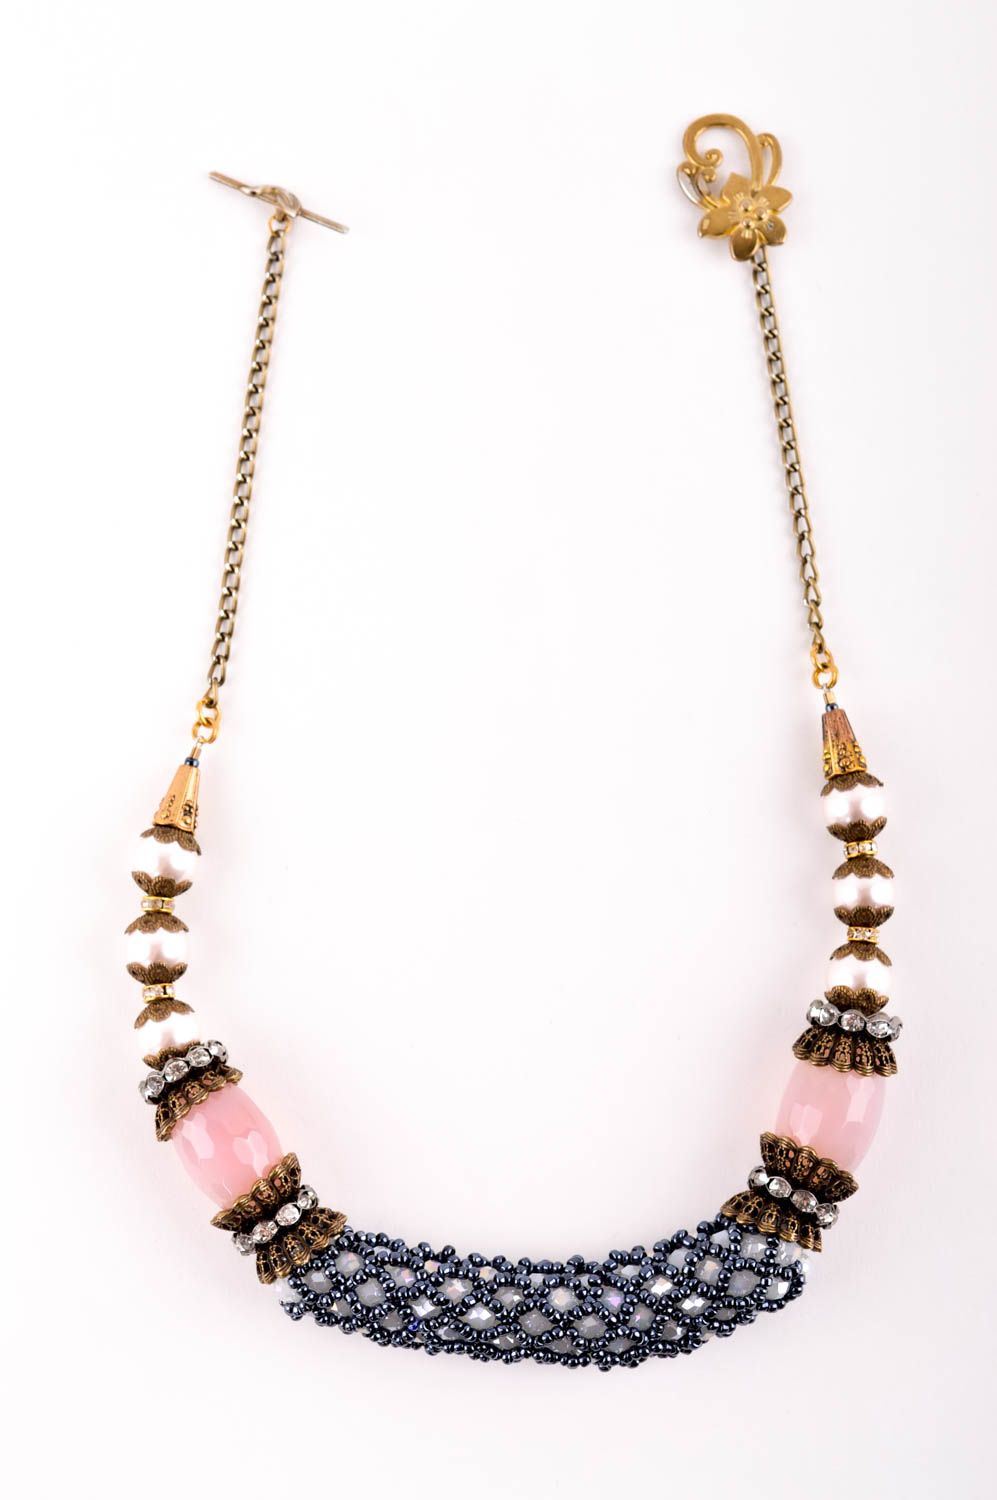 Handmade necklace designer ncklace with stone designer jewelry unusual accessory photo 5